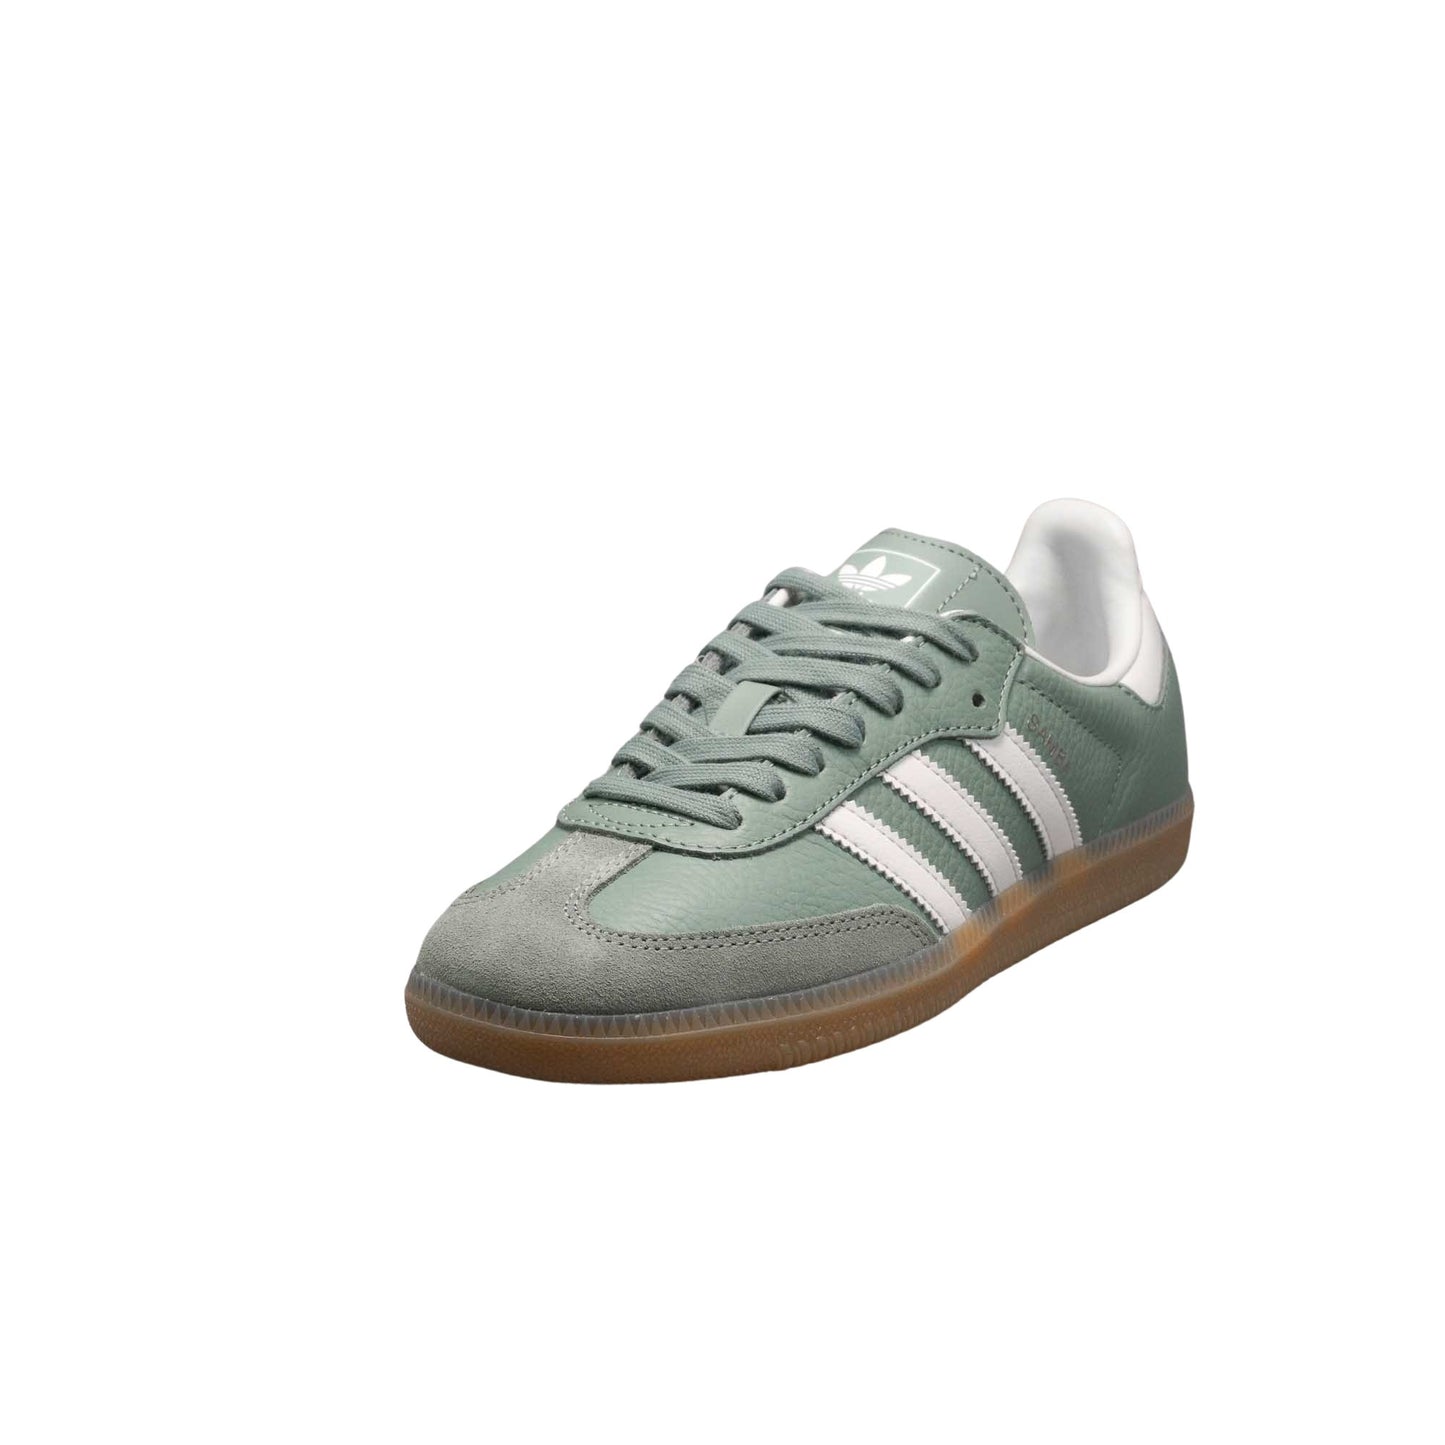 adidas-samba-og-w-green-chalk-white-gum-ie7011